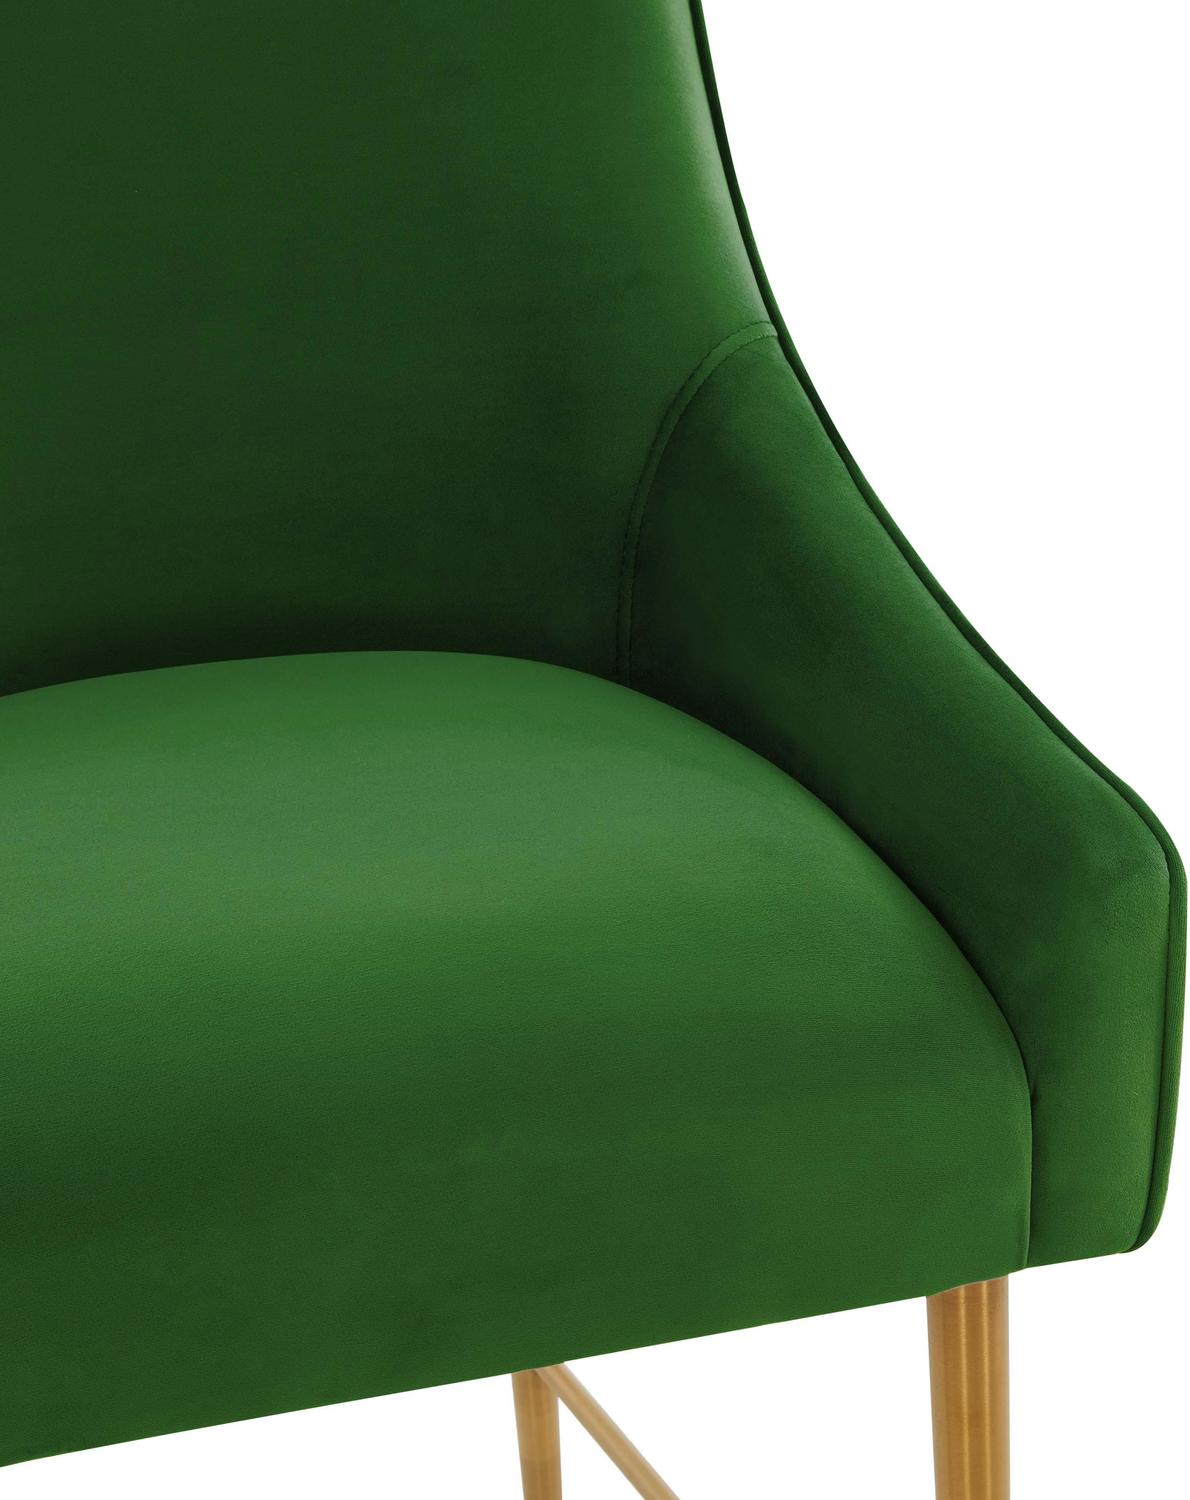 bar stool seats Contemporary Design Furniture Stools Green